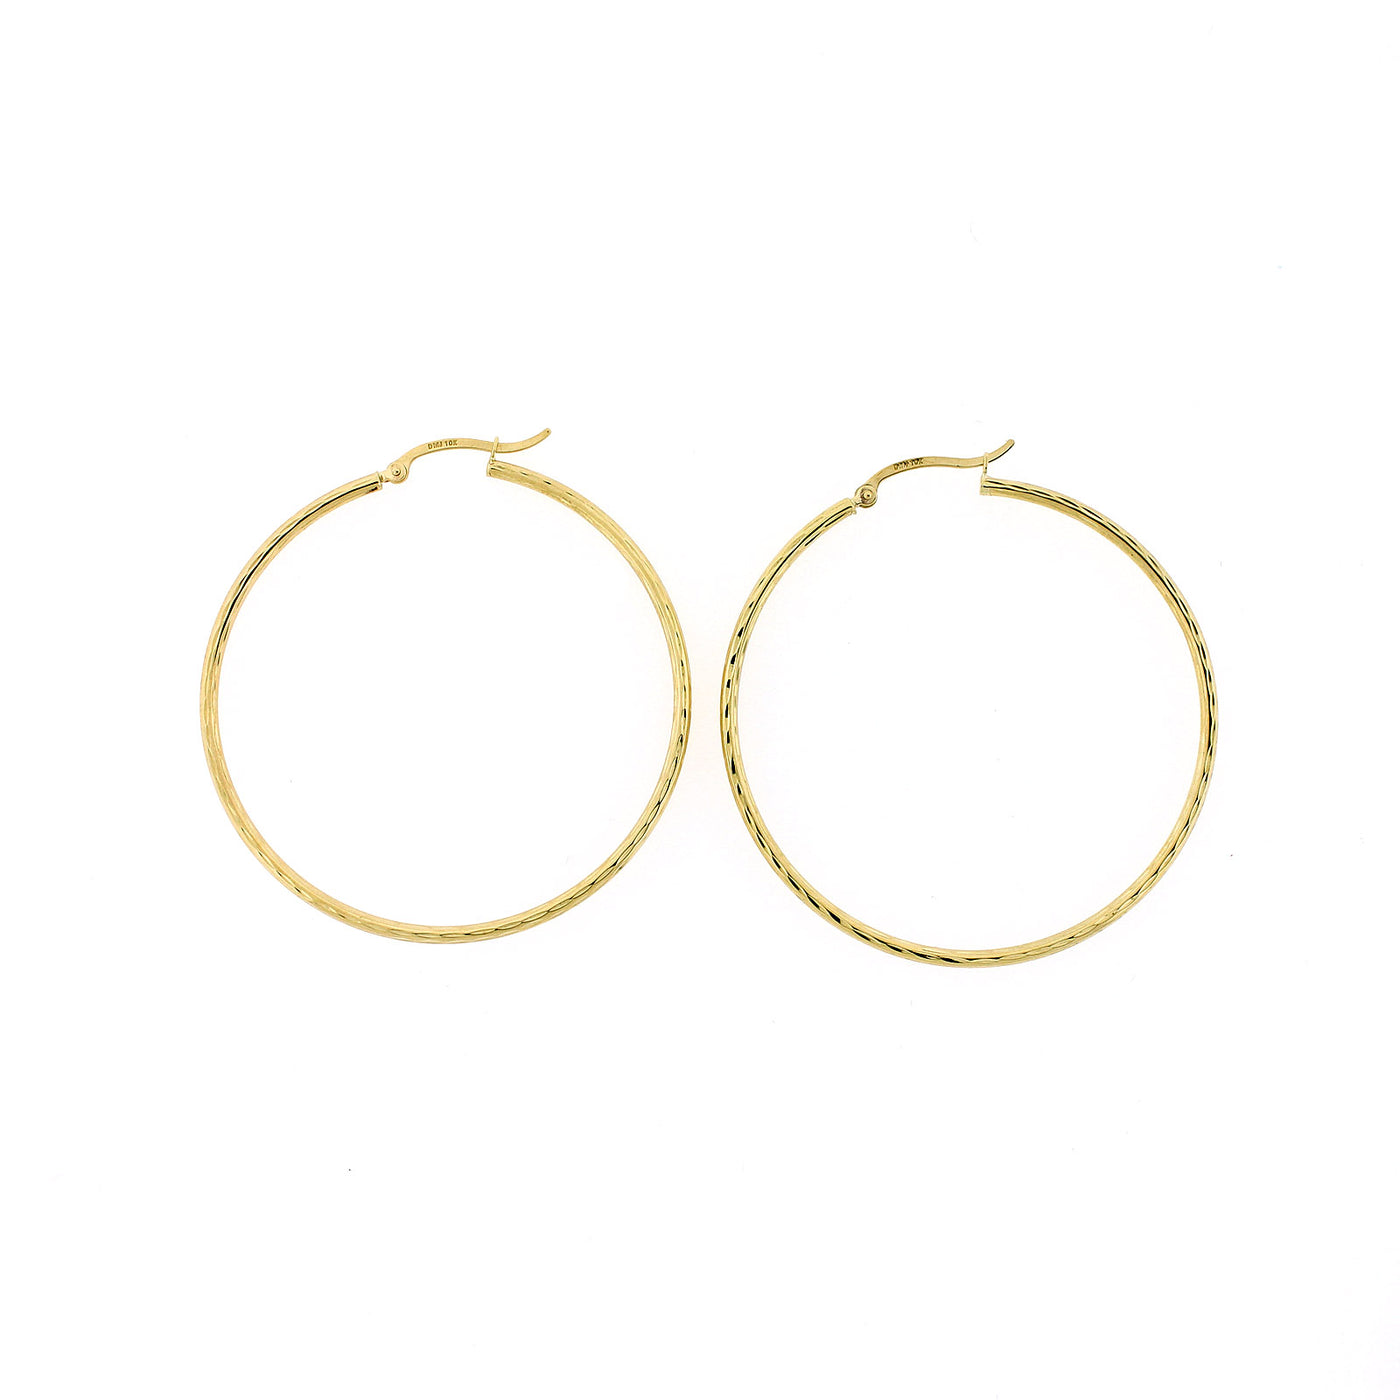 Real 10K Yellow Gold 50mm X 2mm 2" Diamond Cut Large Plain Hoop Earrings